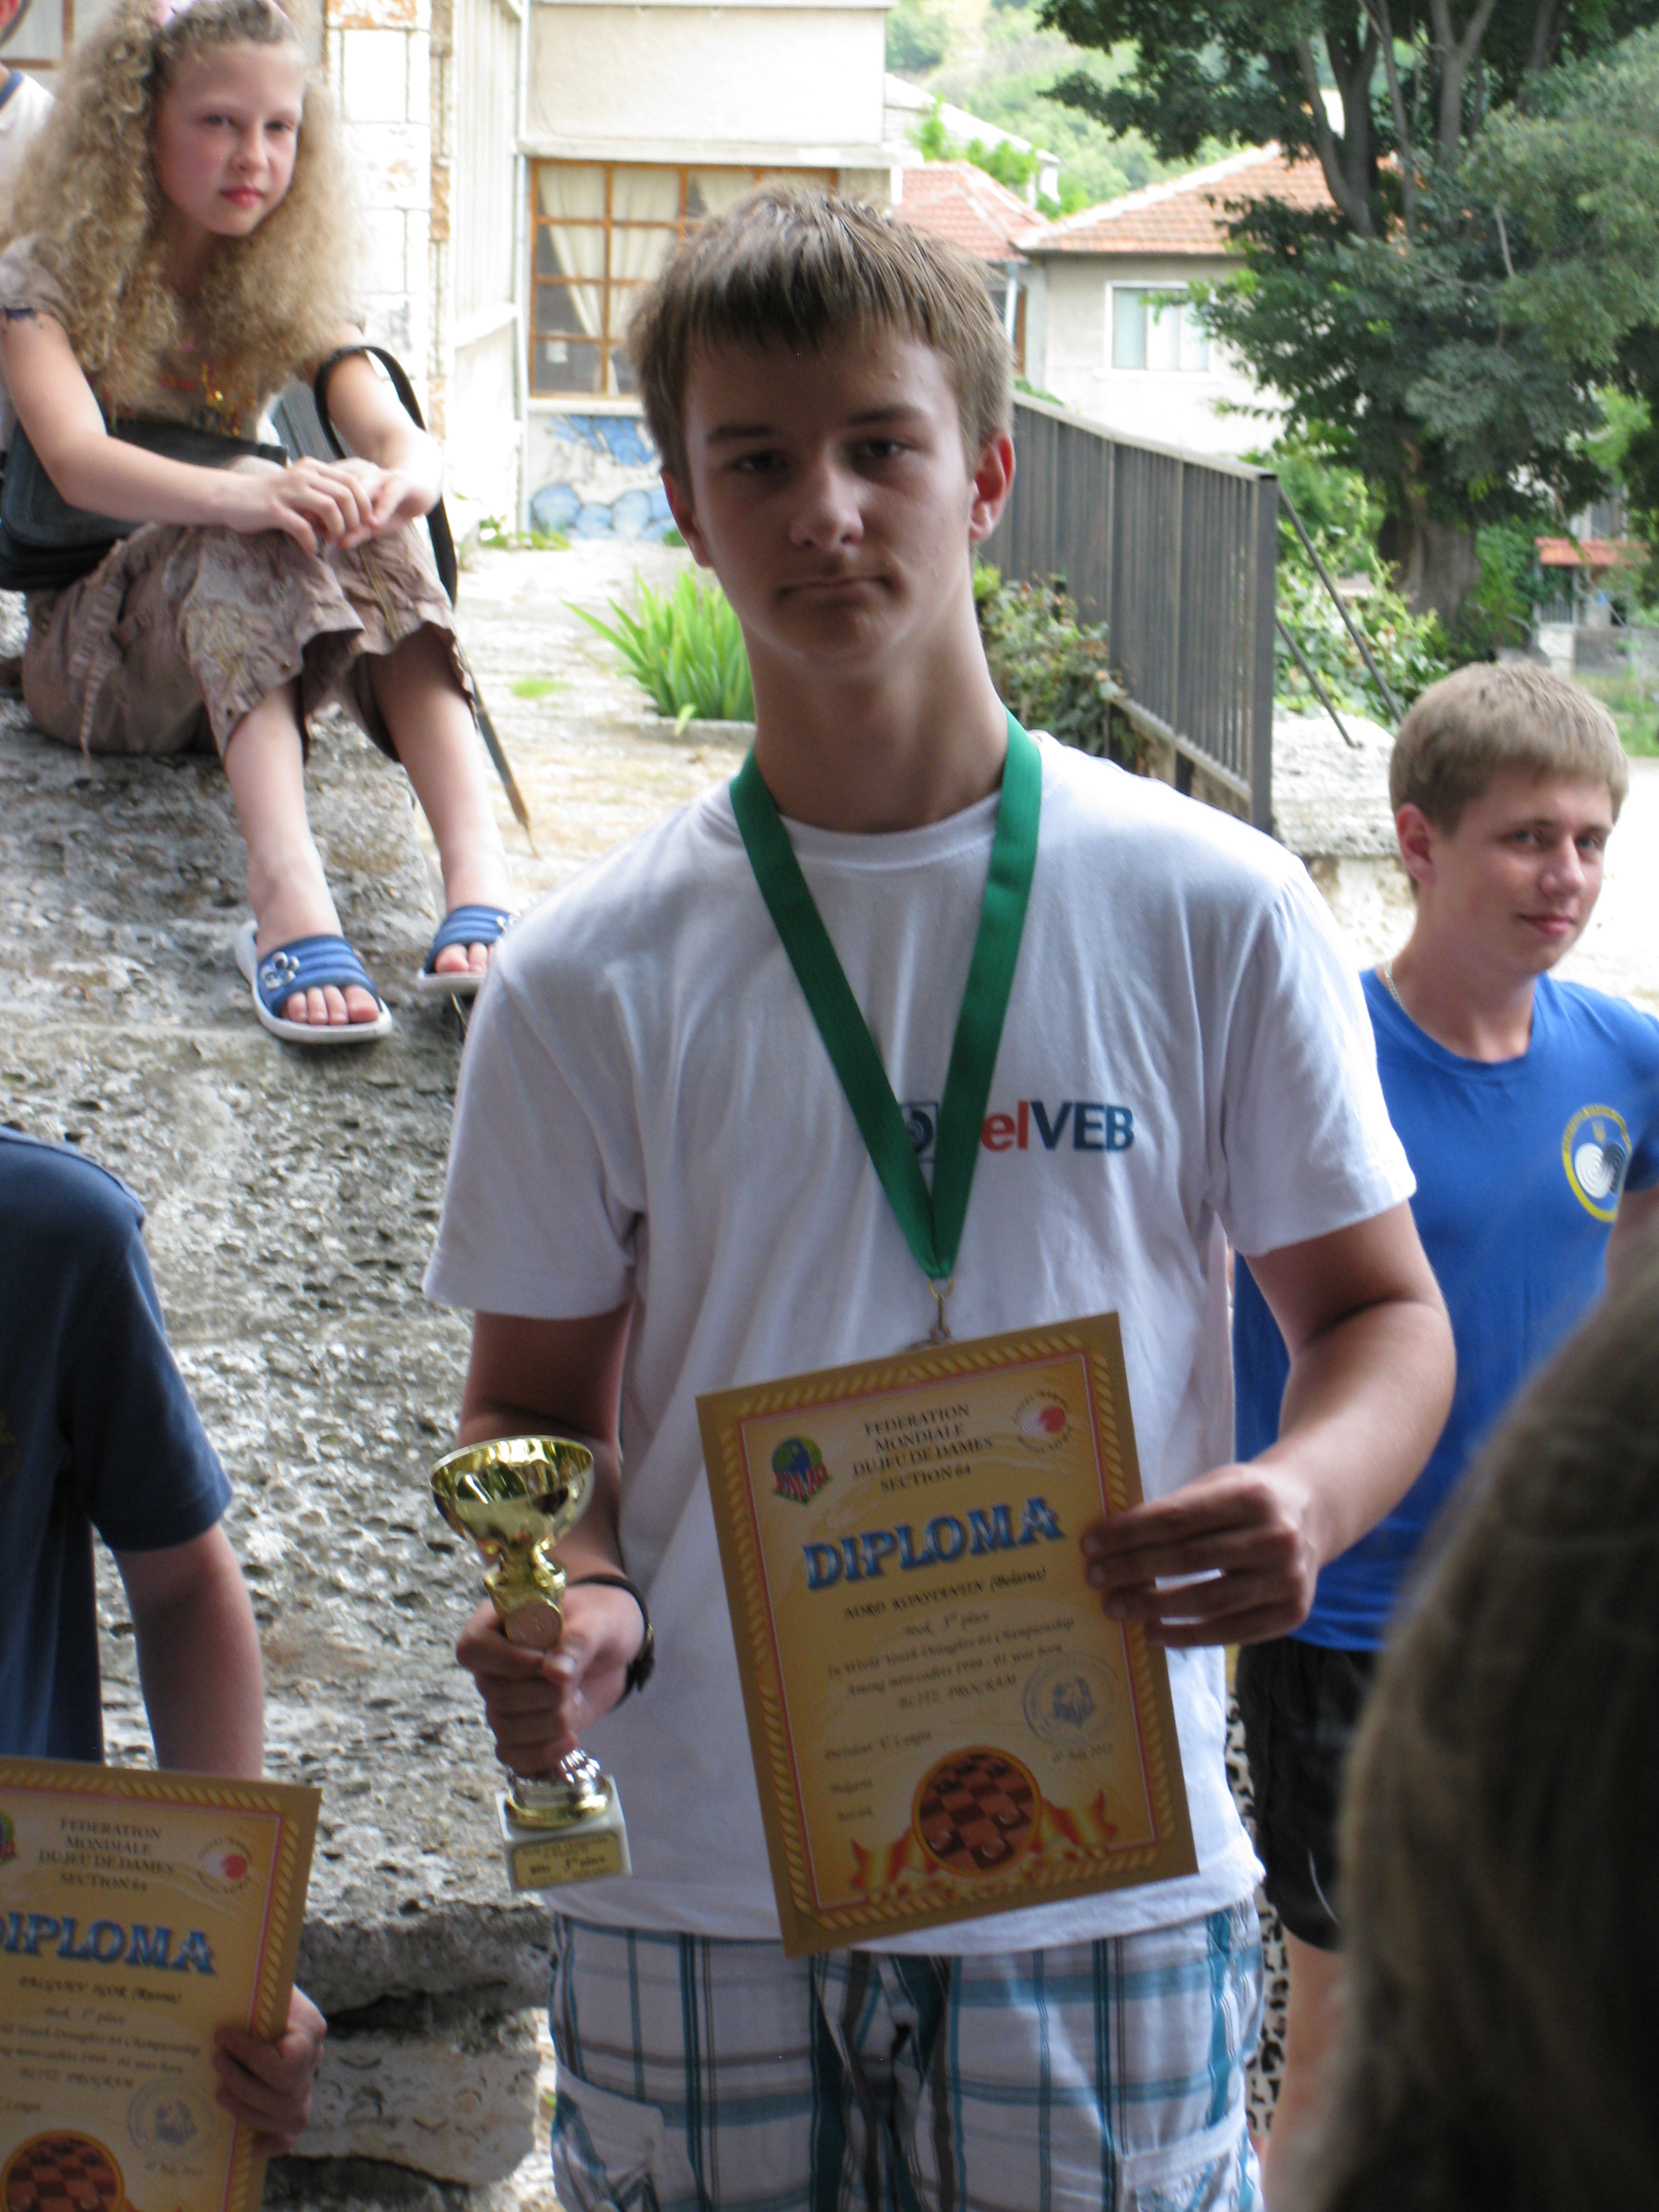        -   - World Youth Championship in Balchik, Bulgaria 6-15.07.2012 - IMG_3044 - IMG_3044.JPG